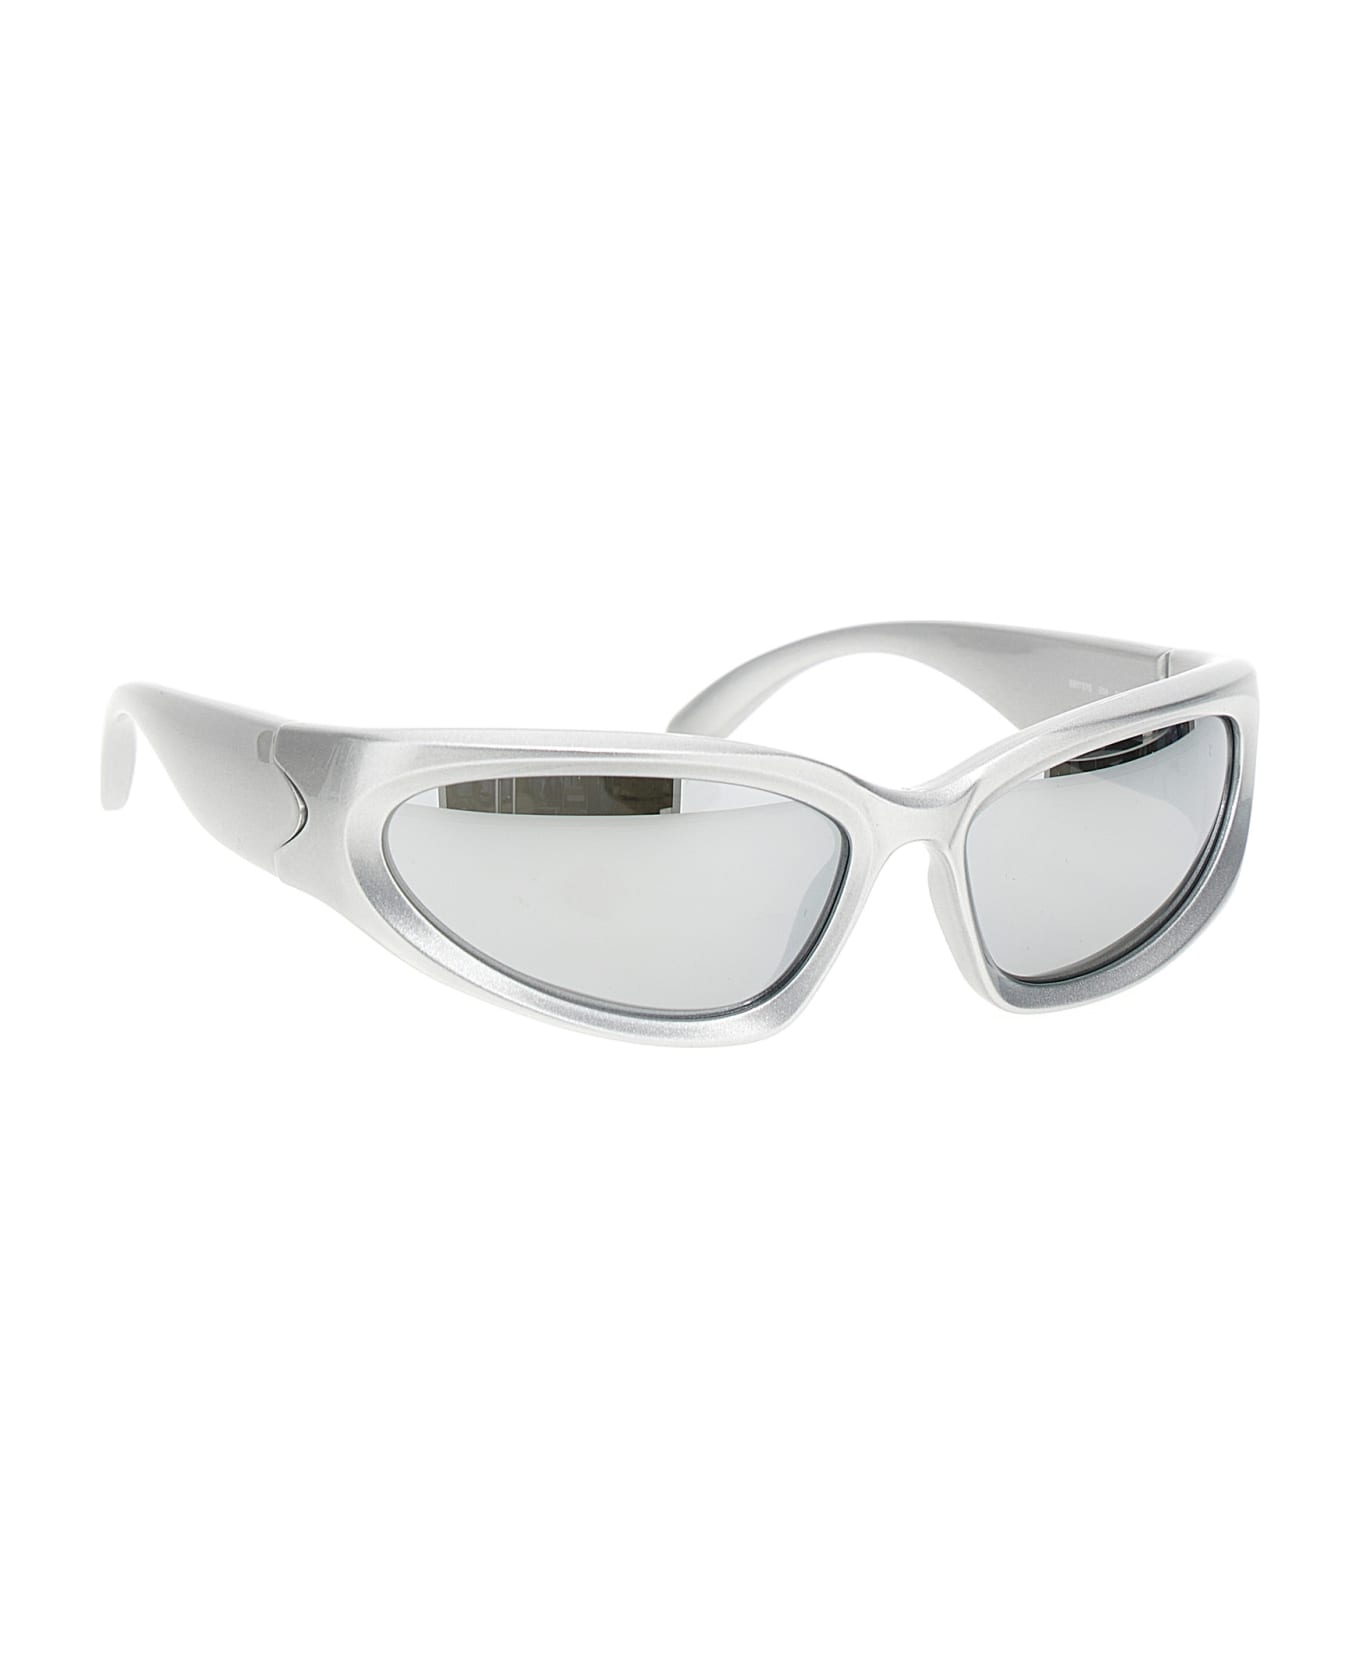 Balenciaga Eyewear Swift Oval Sunglasses - Metallic